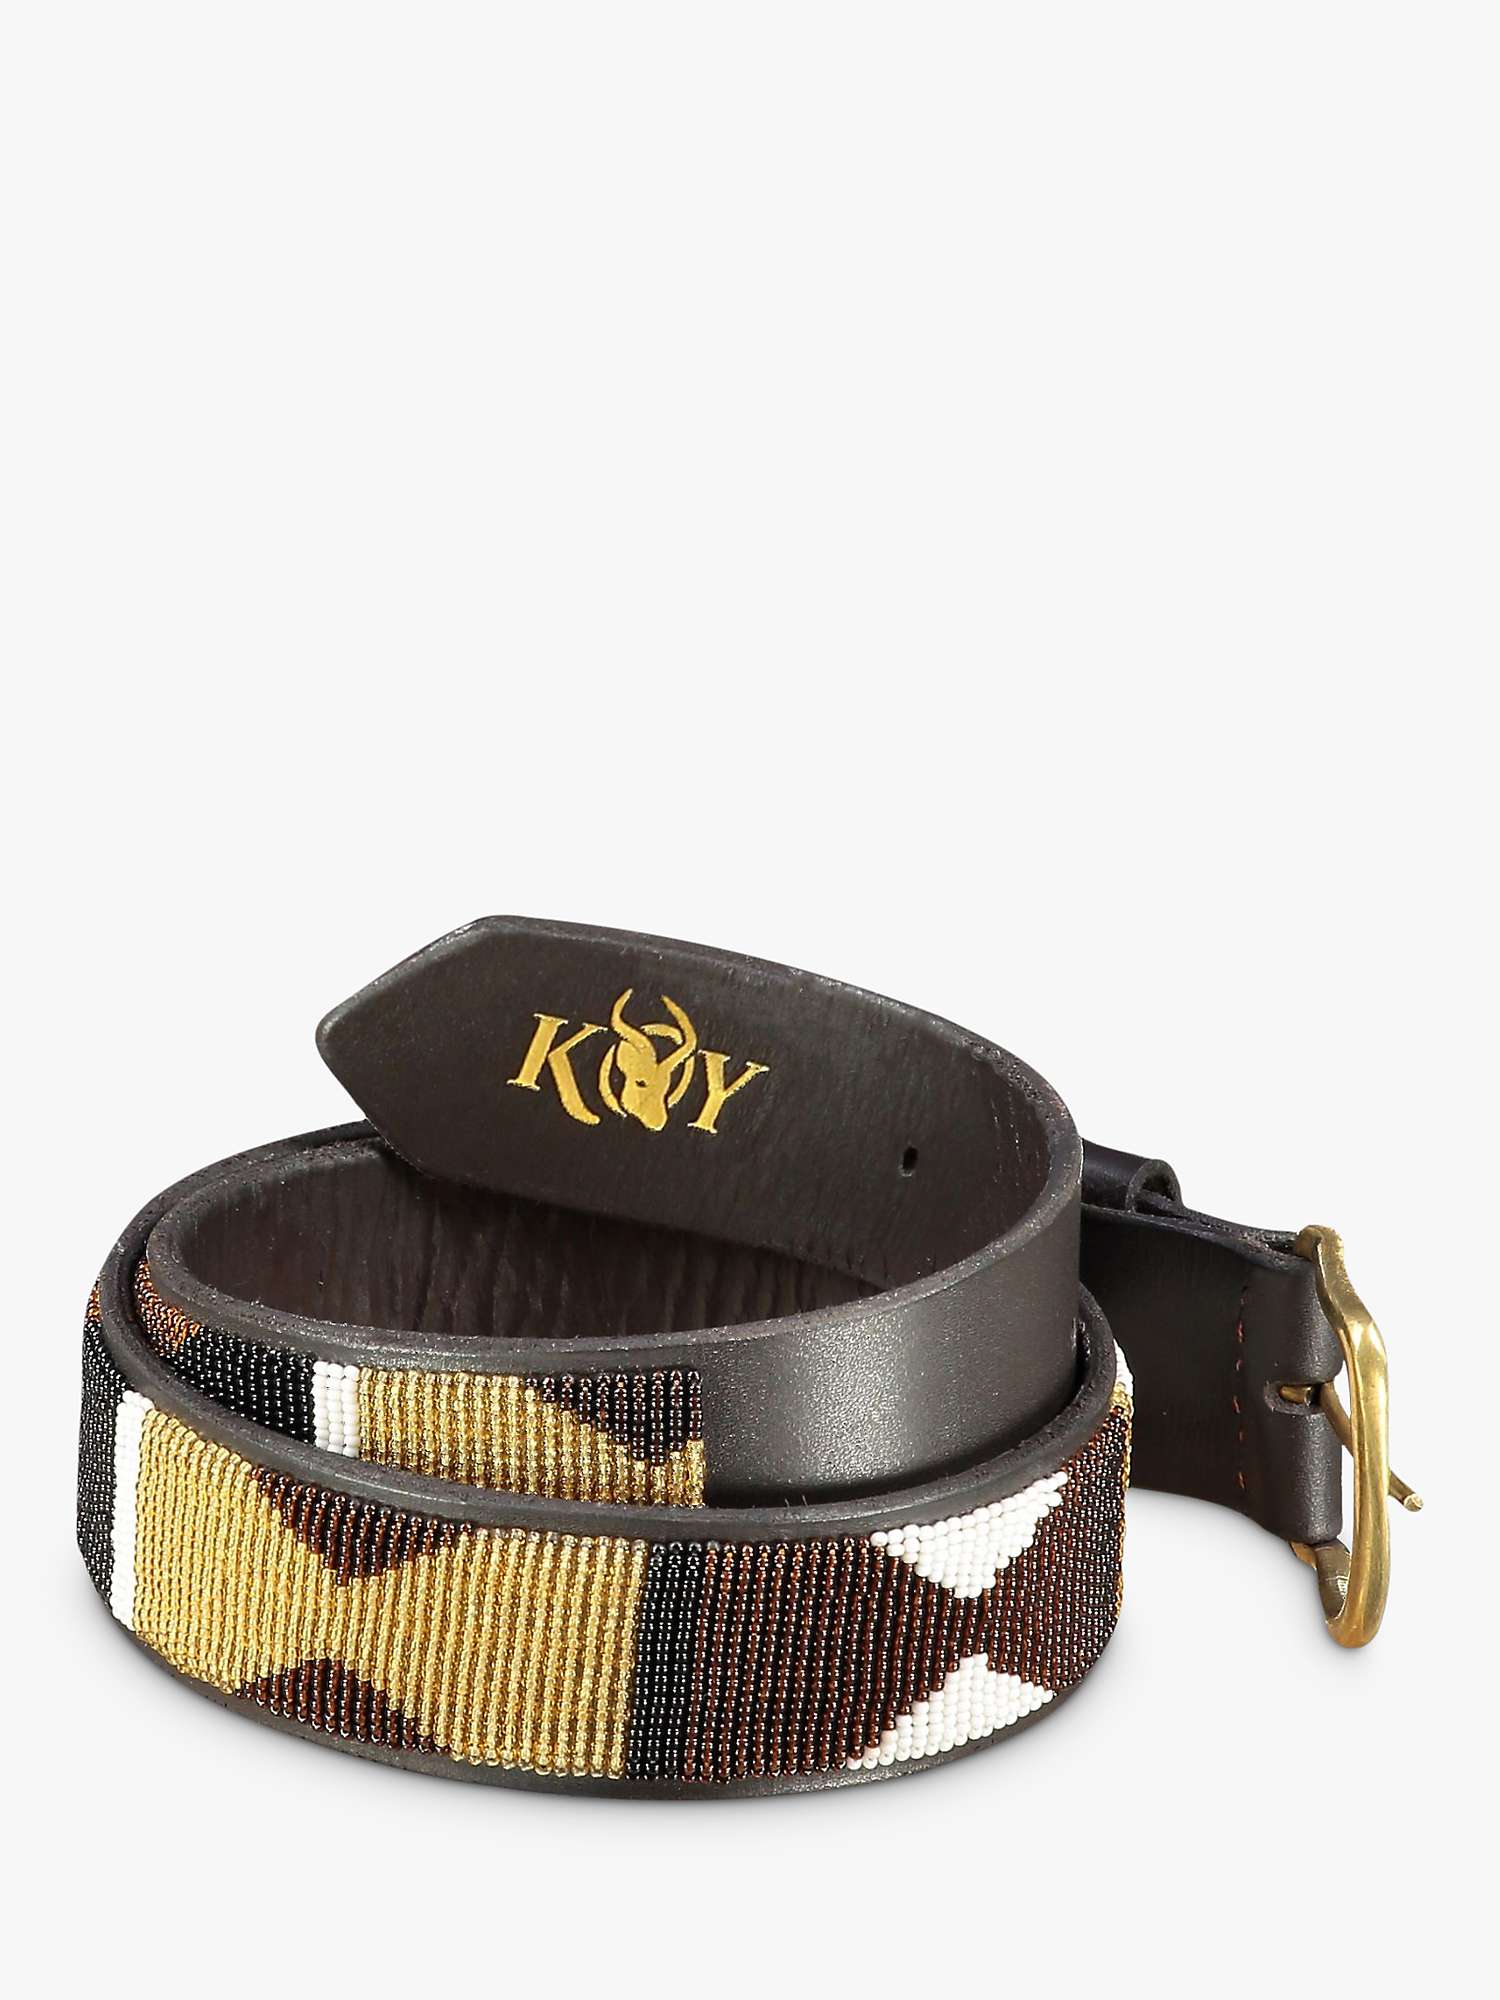 Buy KOY Maasai Dunia Wide Belt, Brown/Gold Online at johnlewis.com